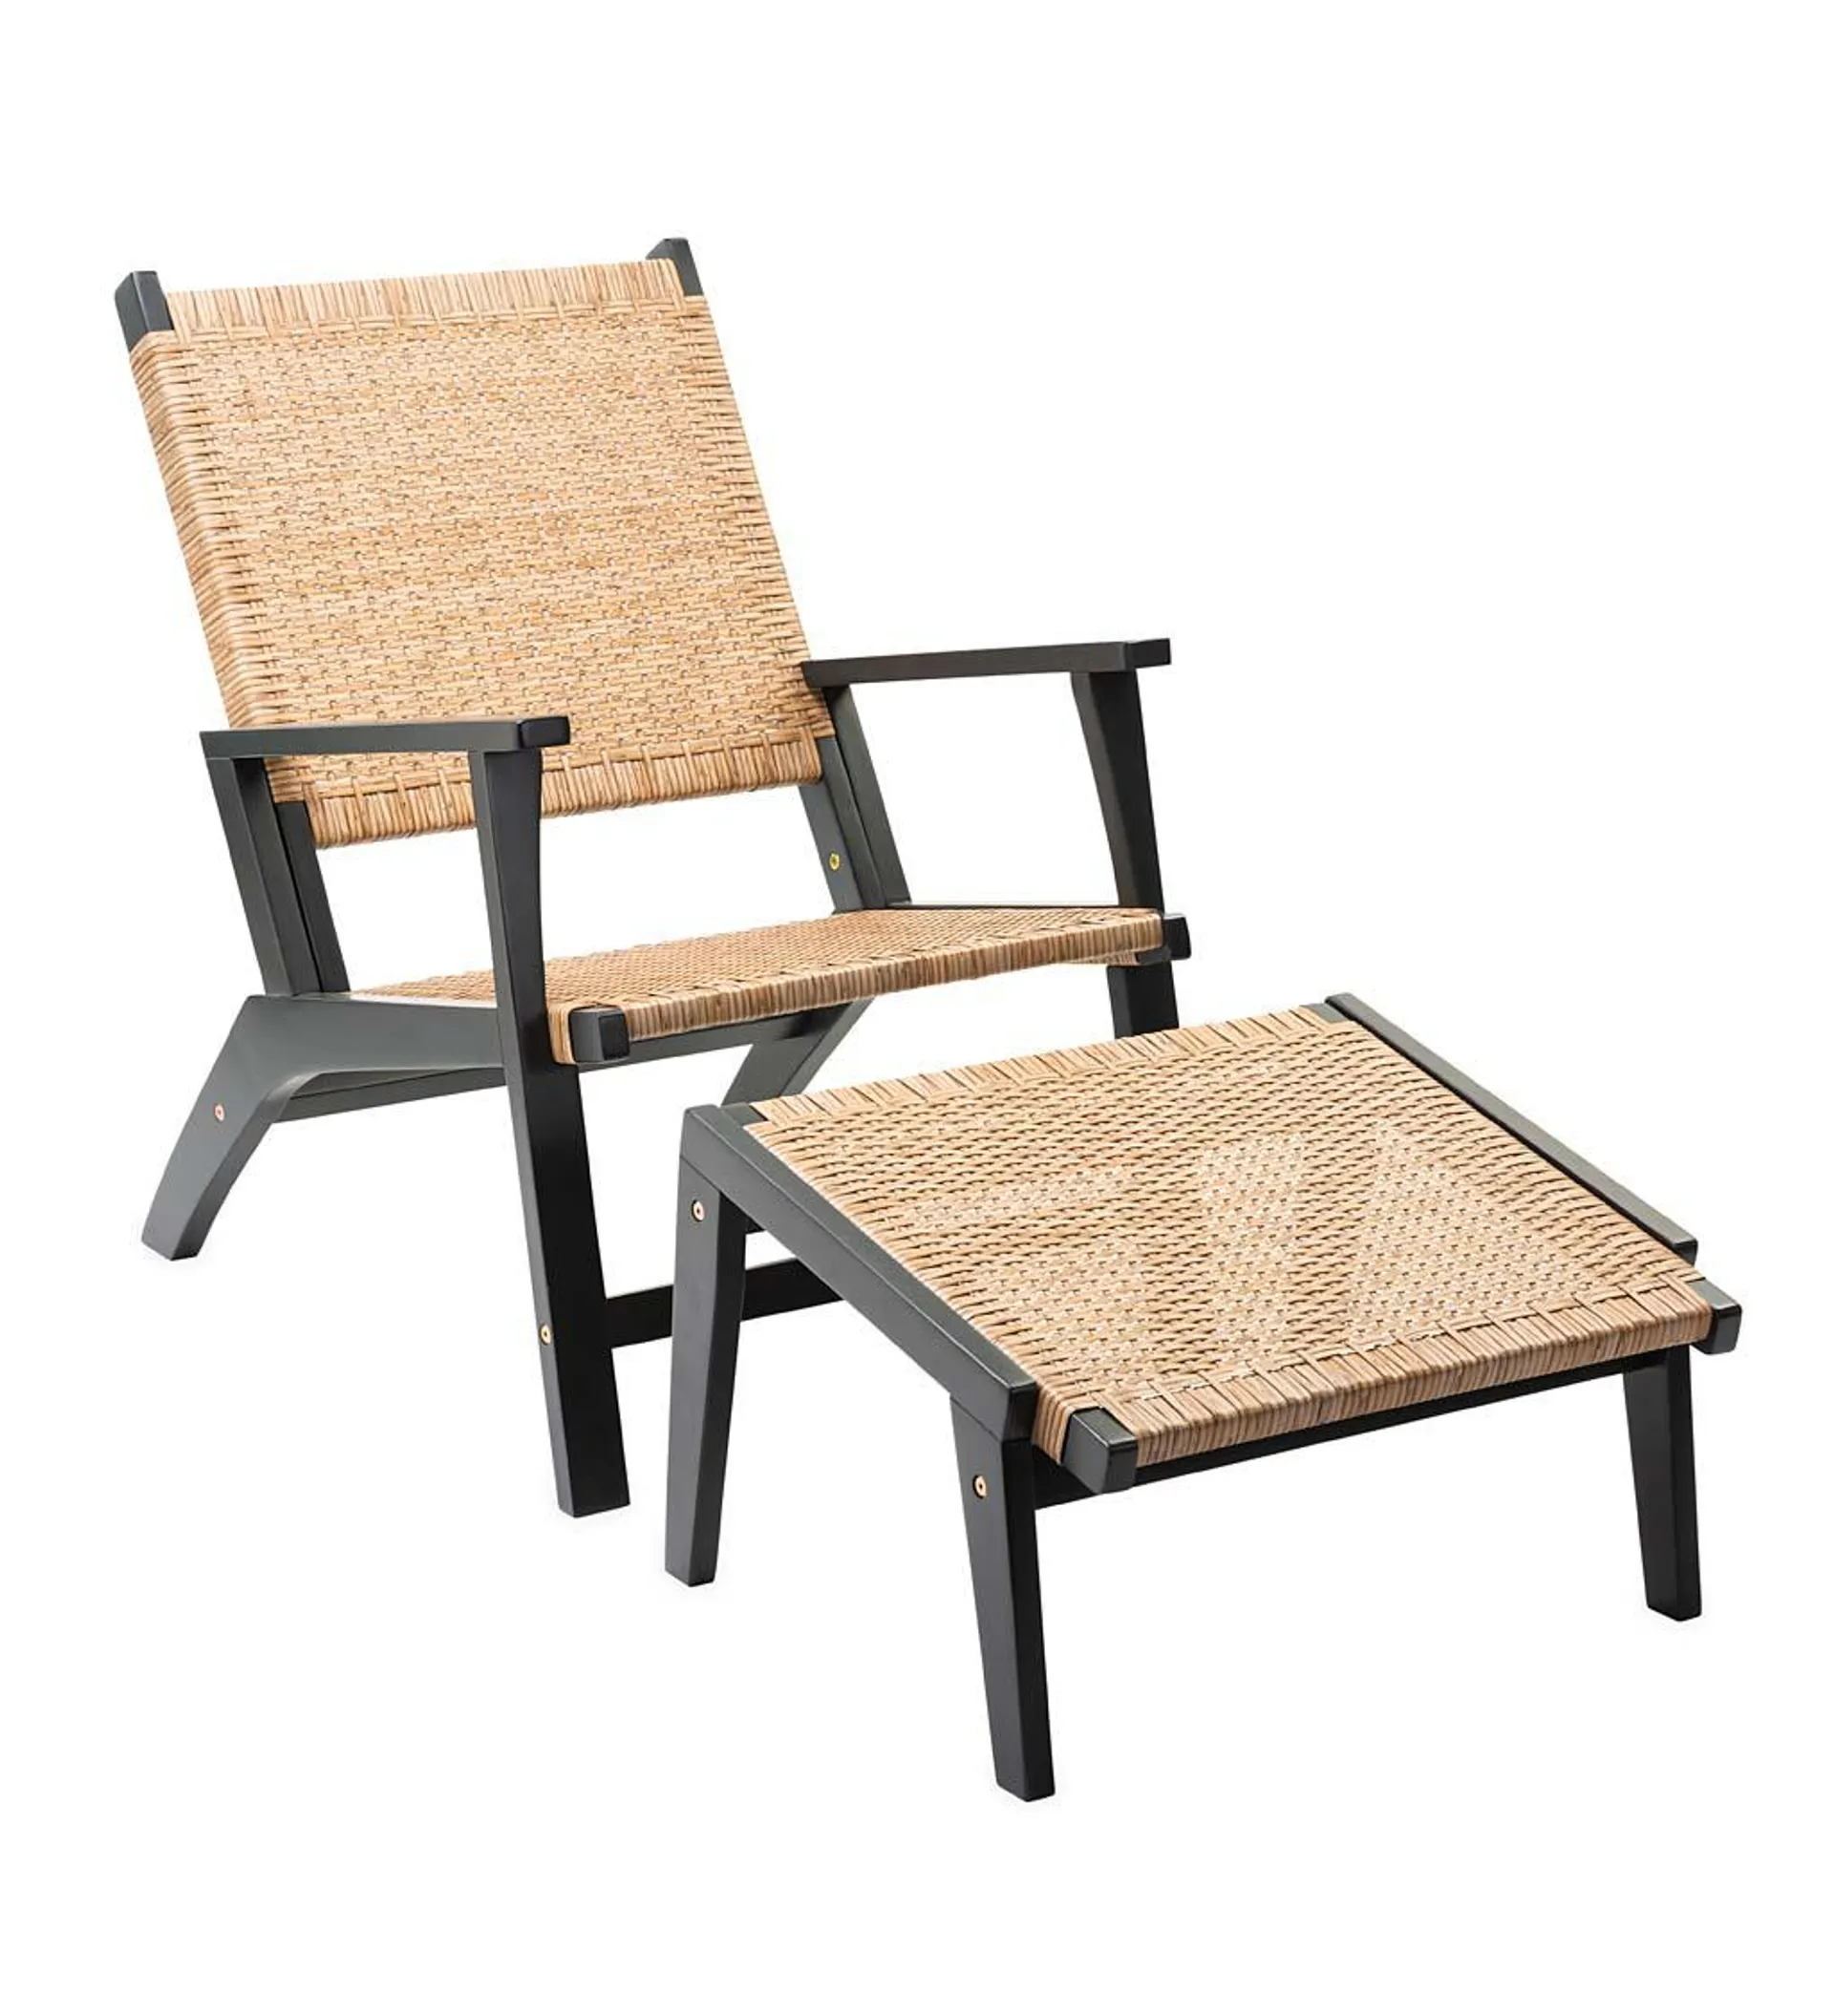 Claytor Eucalyptus Outdoor Furniture, Chair and Ottoman, 2-Piece Set - Black